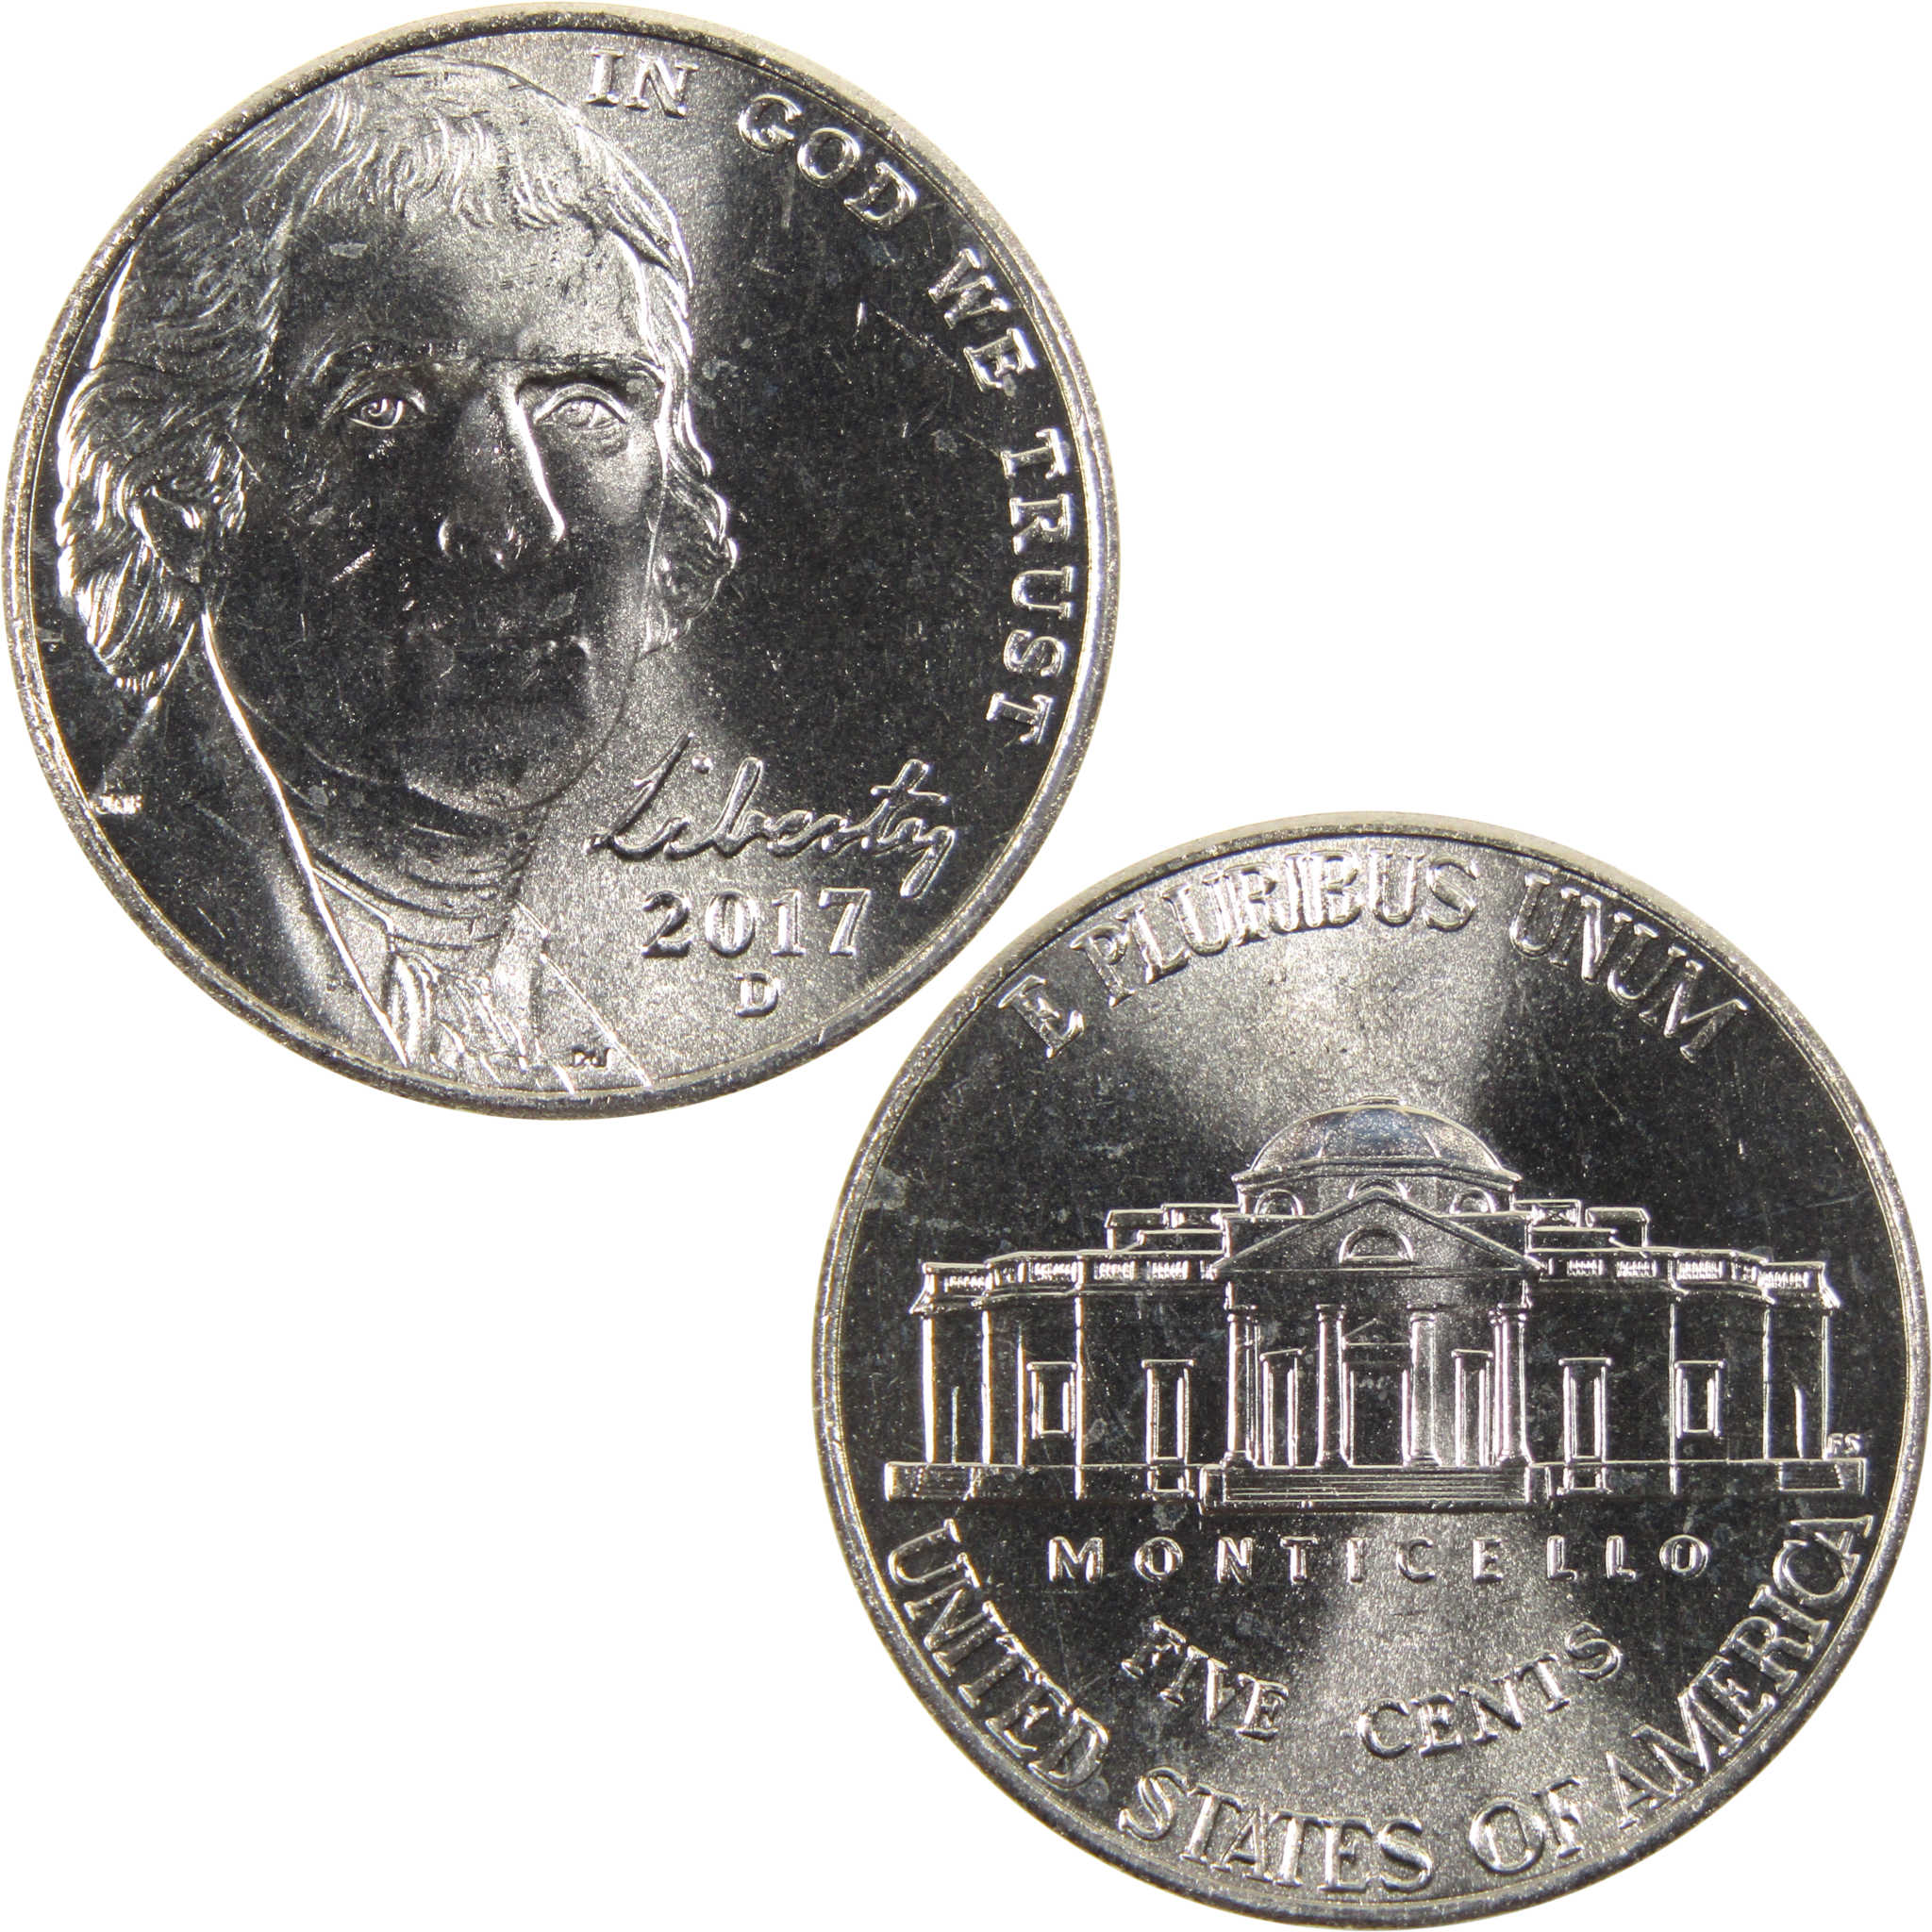 2017 D Jefferson Nickel BU Uncirculated 5c Coin